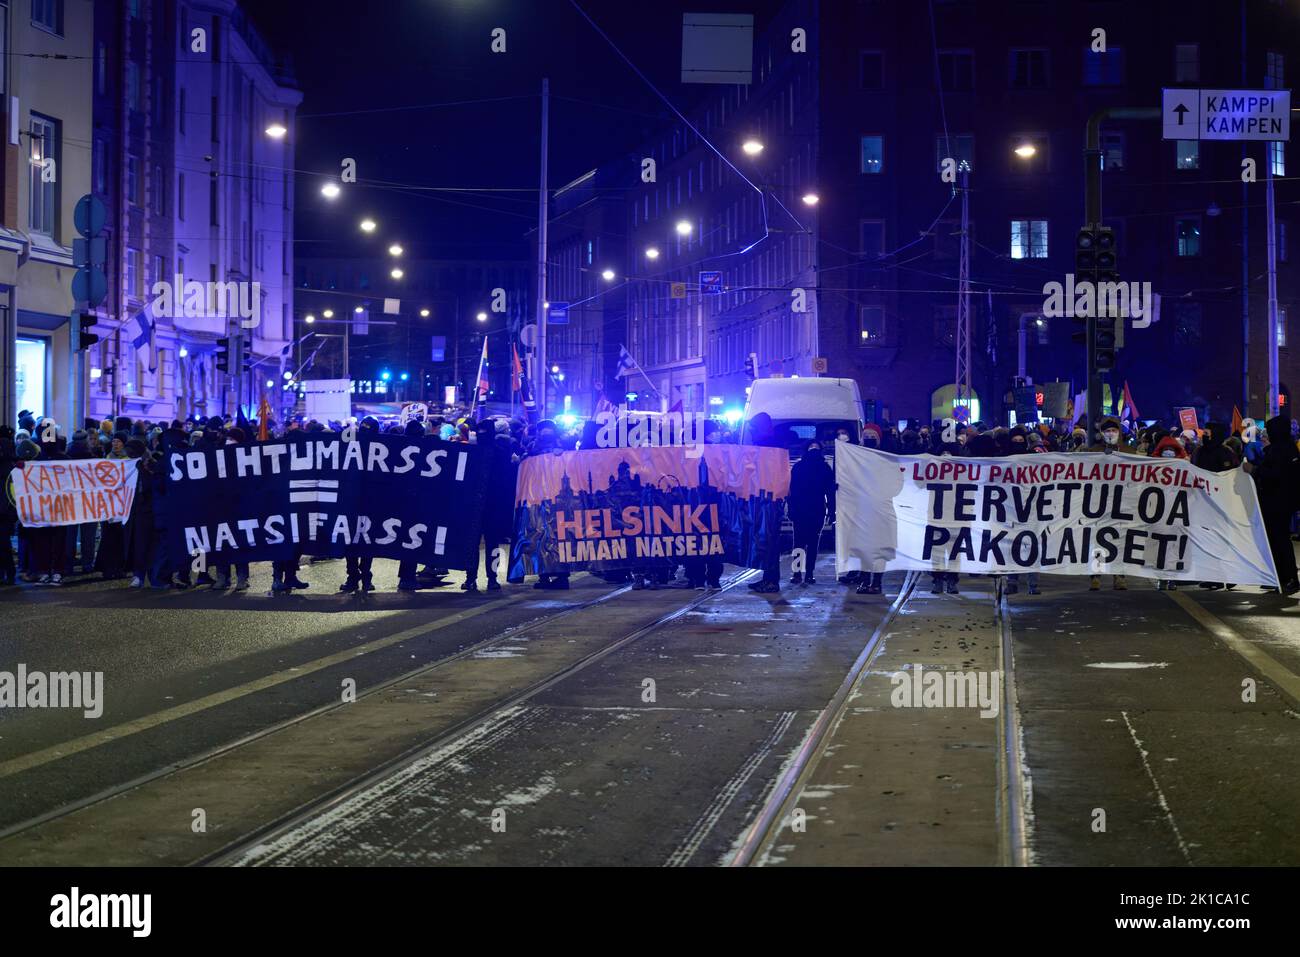 Helsinki, Finlandia - 6 dicembre 2021: I manifestanti della sinistra antifascista Helsinki ilman natseja (Helsinki senza nazisti) processione / cou Foto Stock